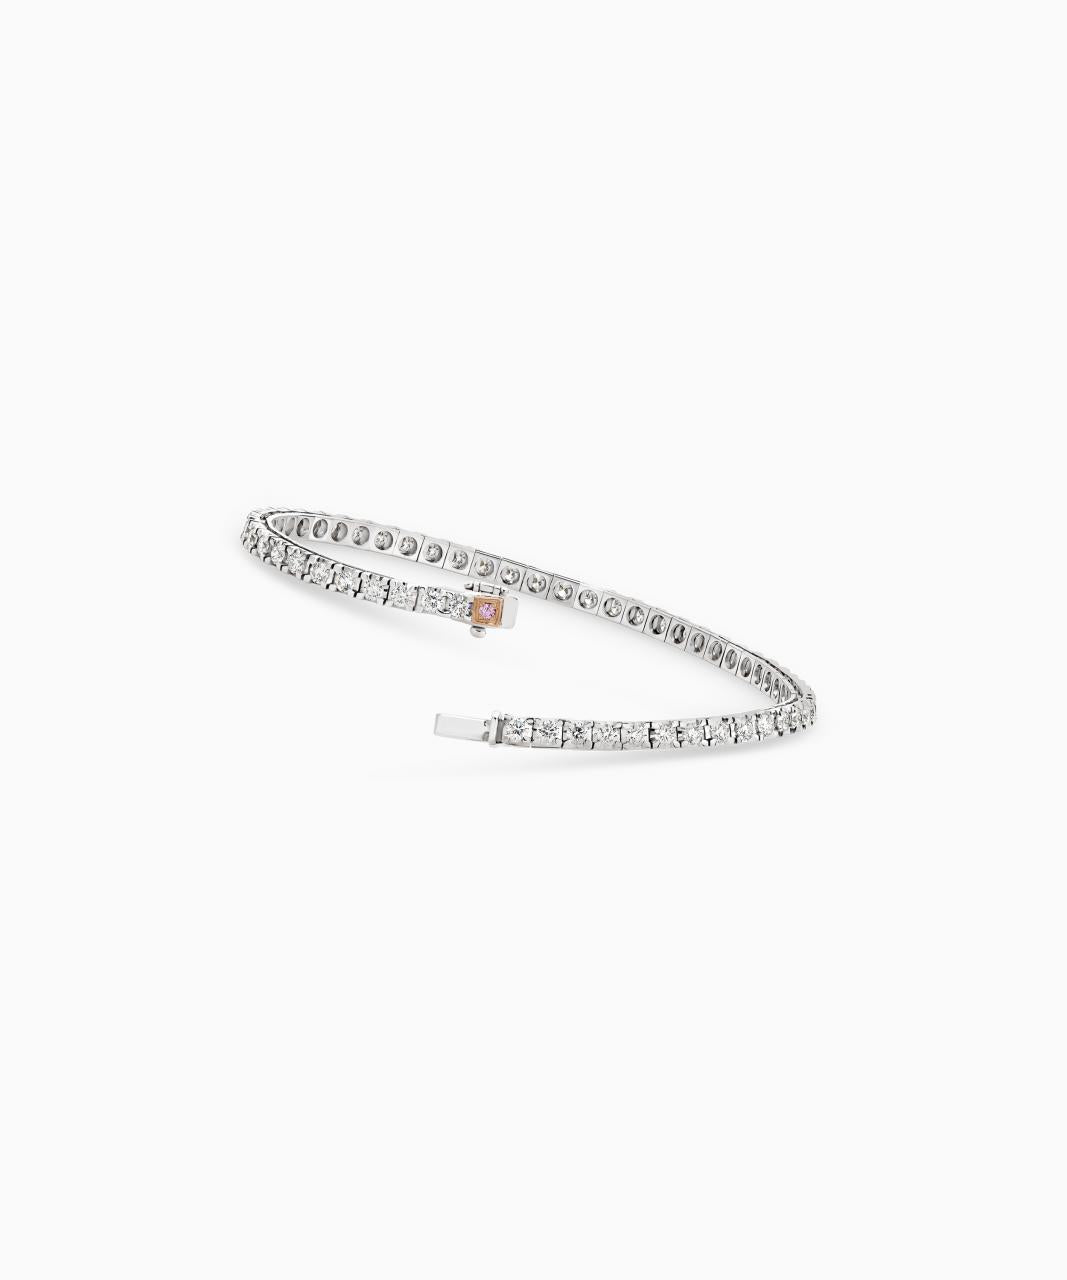 Tennis Bracelet - 5 Points with Argyle Pink Diamond